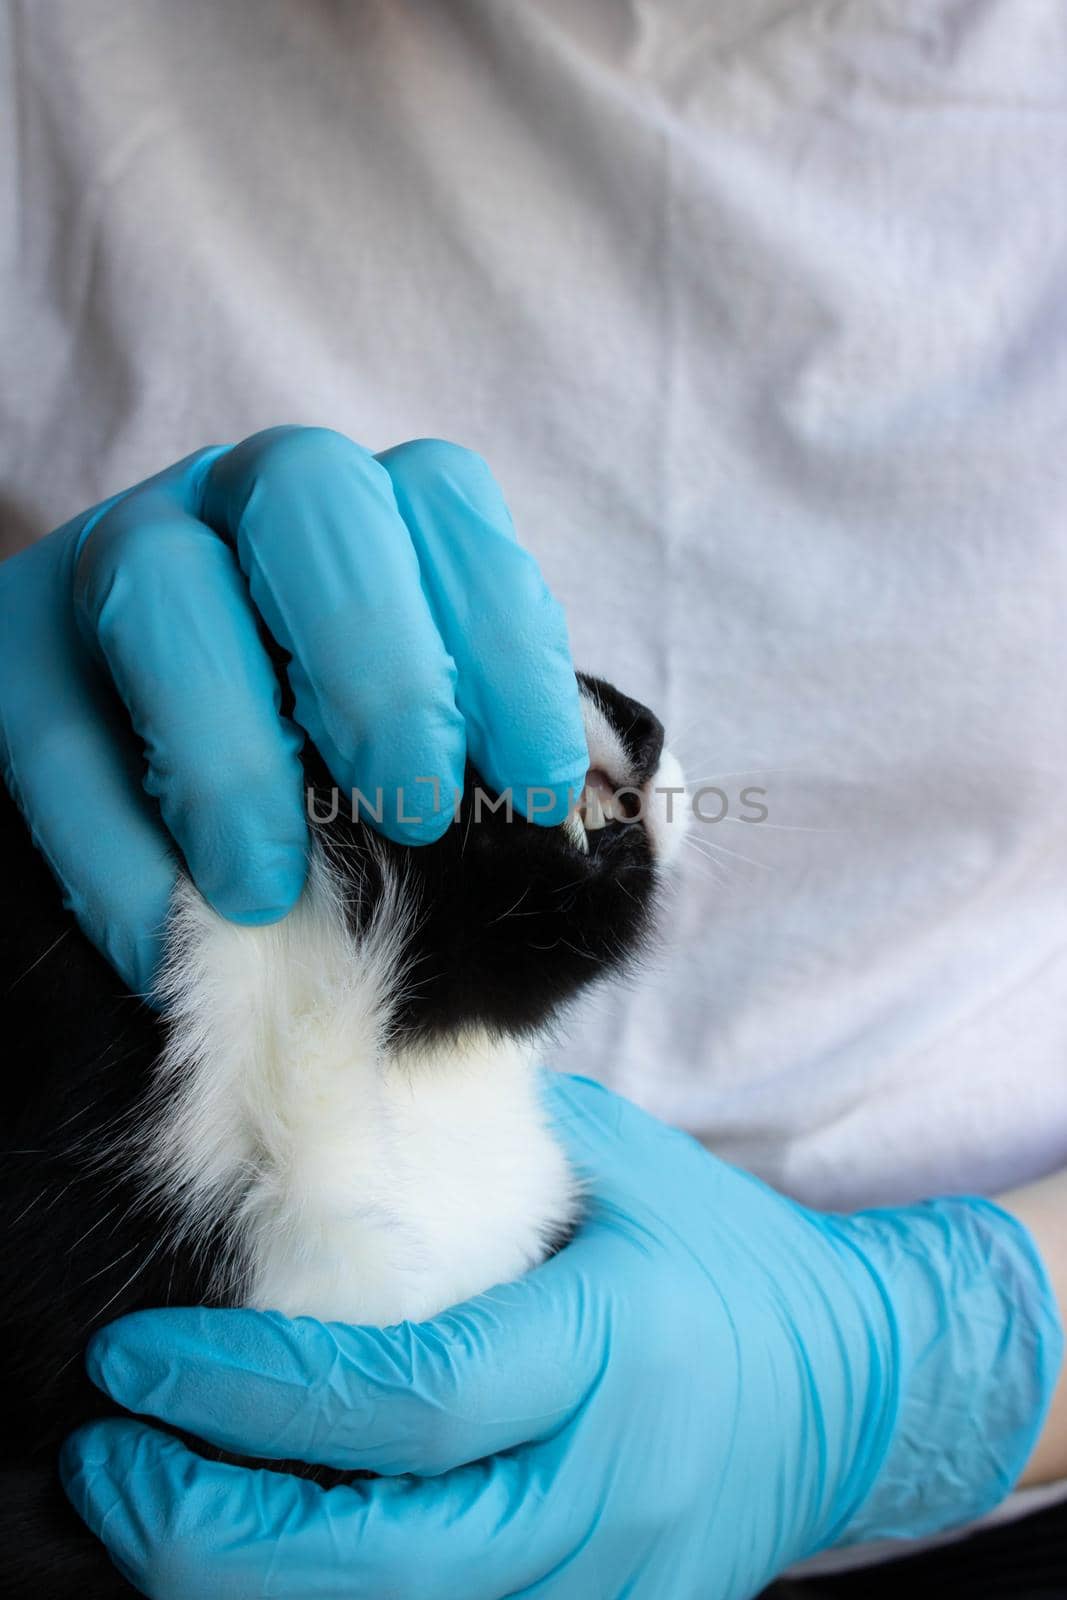 A veterinarian examines a black cat's teeth at the clinic by lapushka62